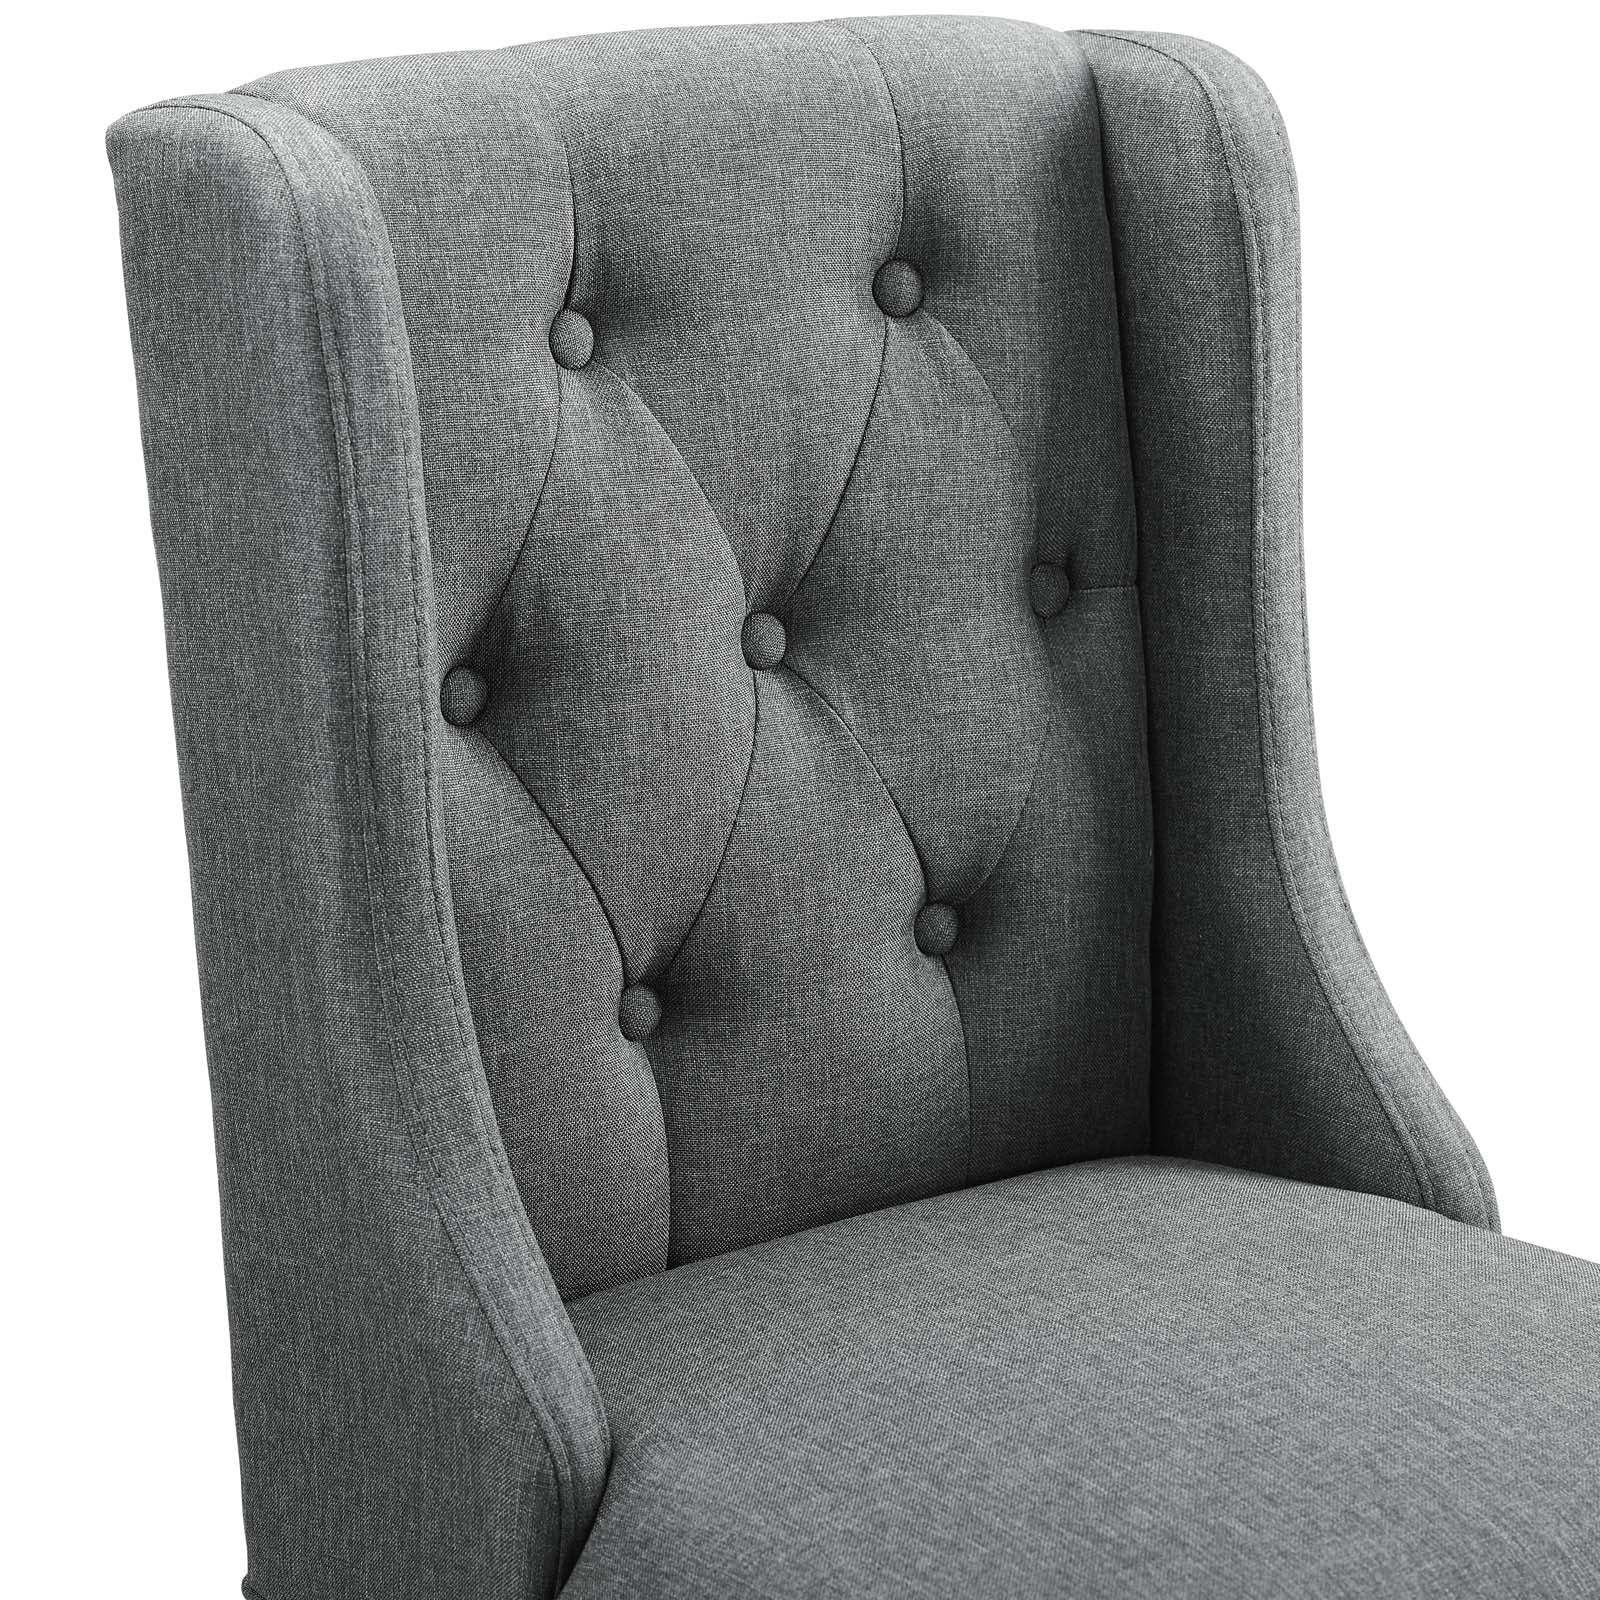 Baronet Bar Stool Upholstered Fabric Set of 2 - East Shore Modern Home Furnishings